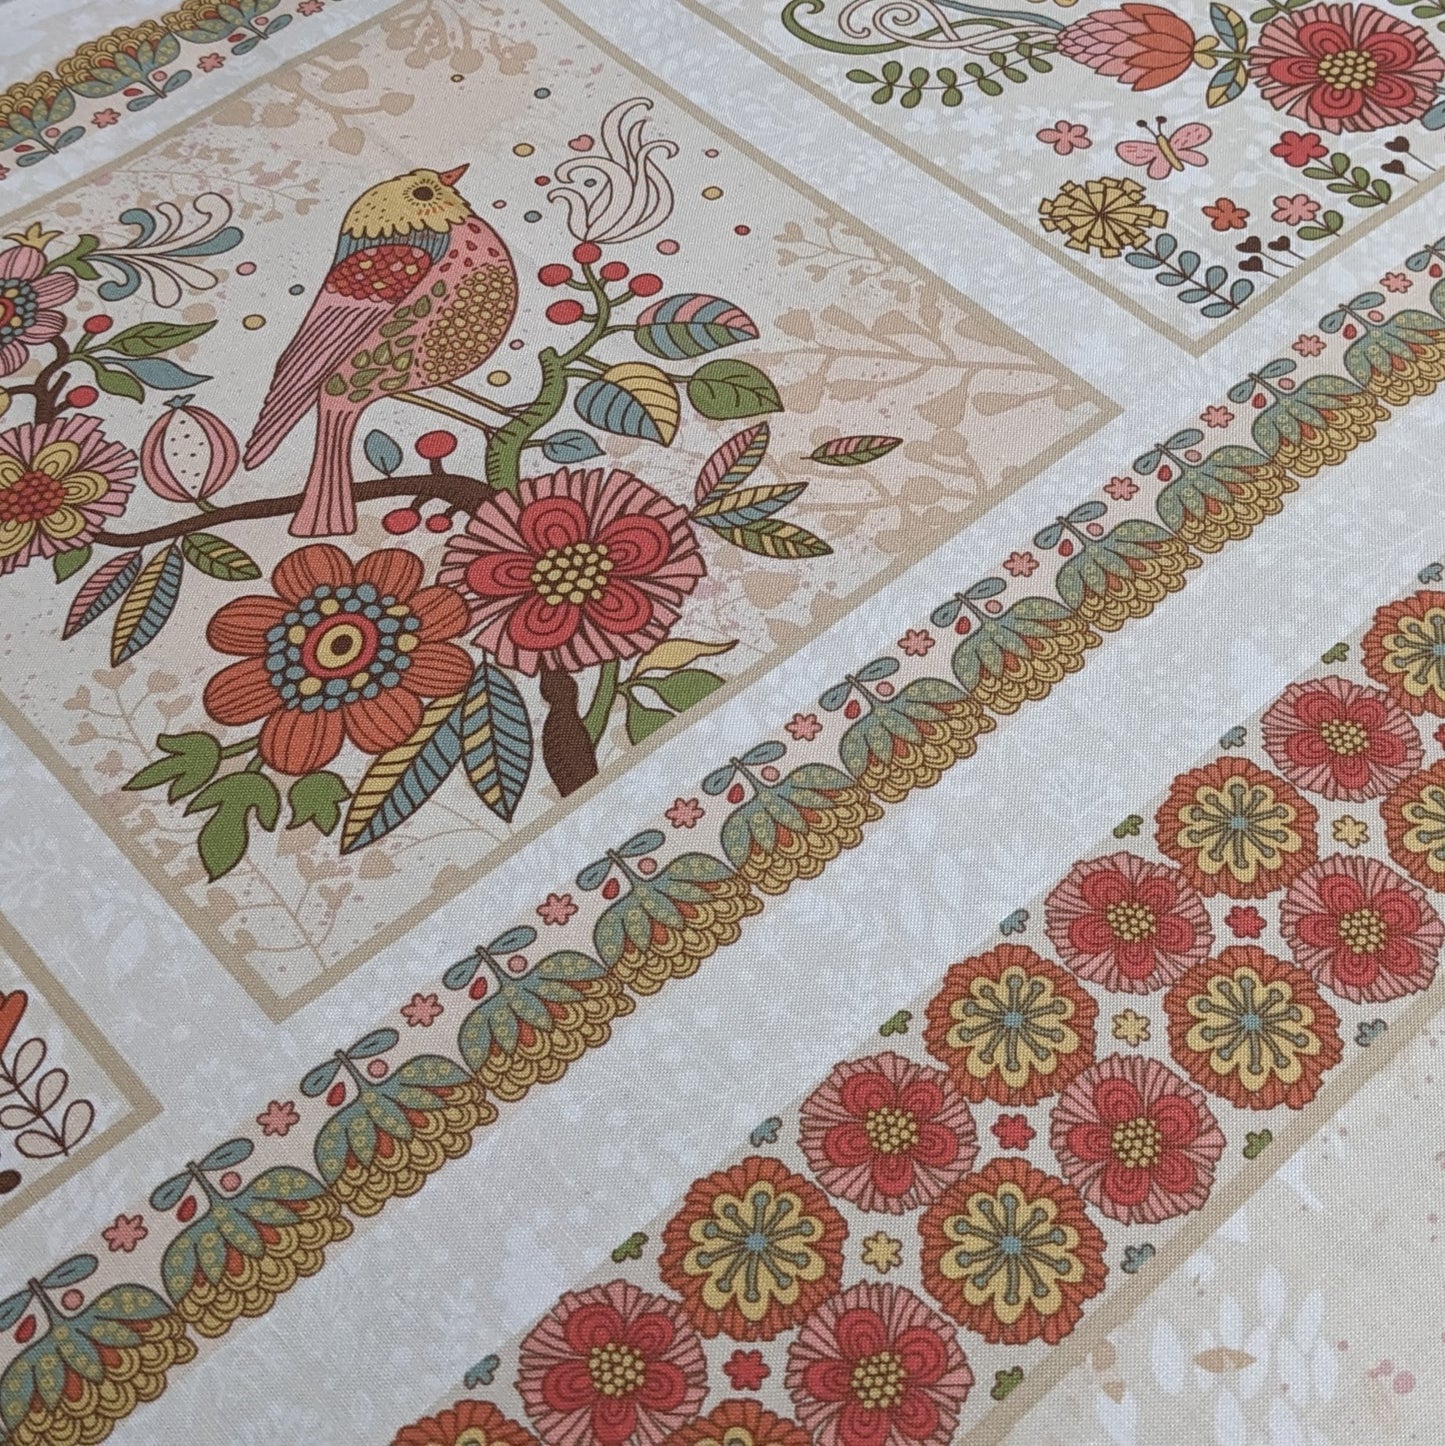 Bird Song Fabric Collection - Pat Sloan